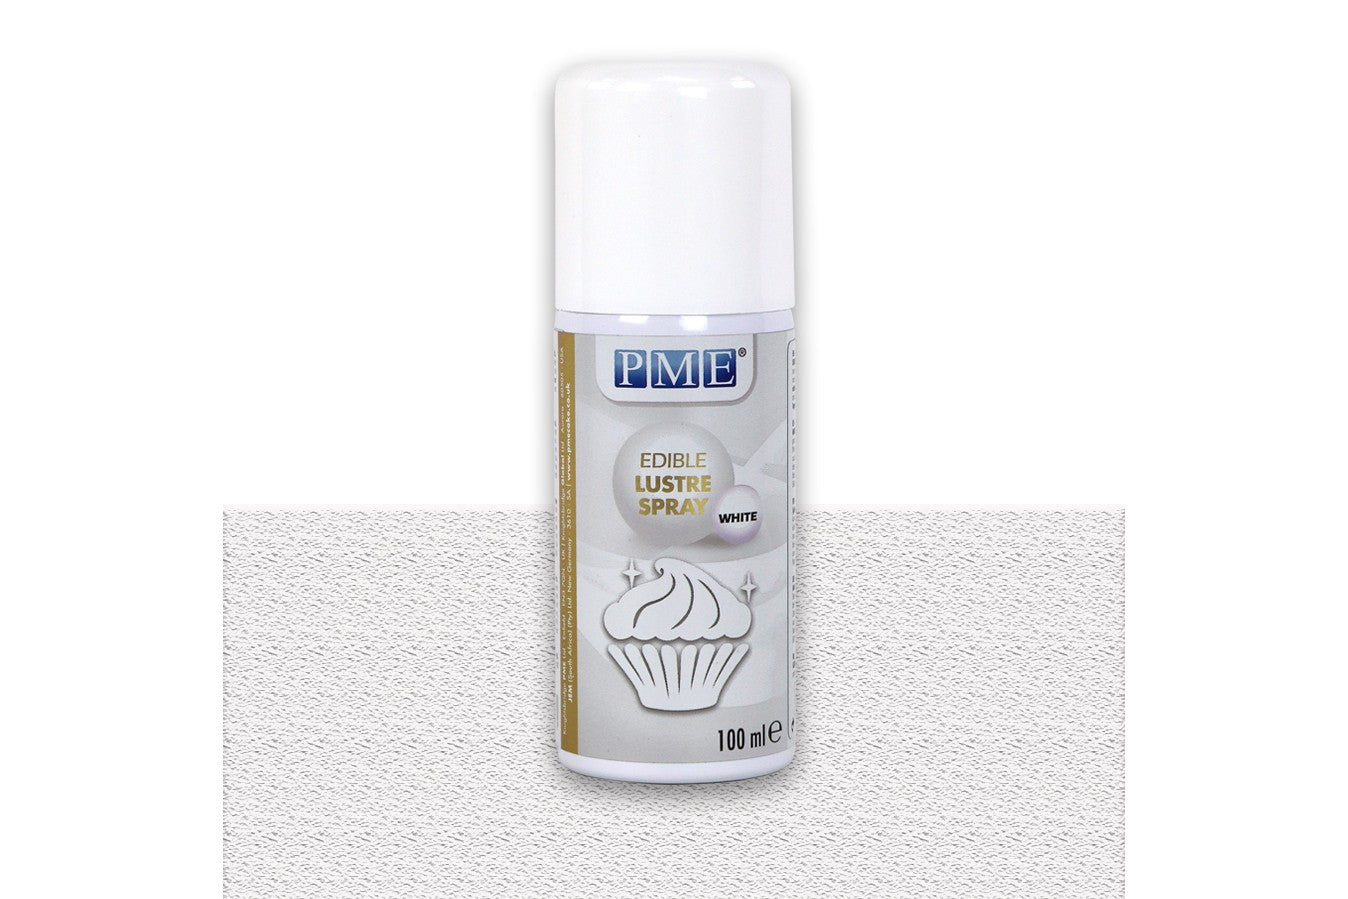 PME Edible Lustre Spray - White 100ml - The Cooks Cupboard Ltd